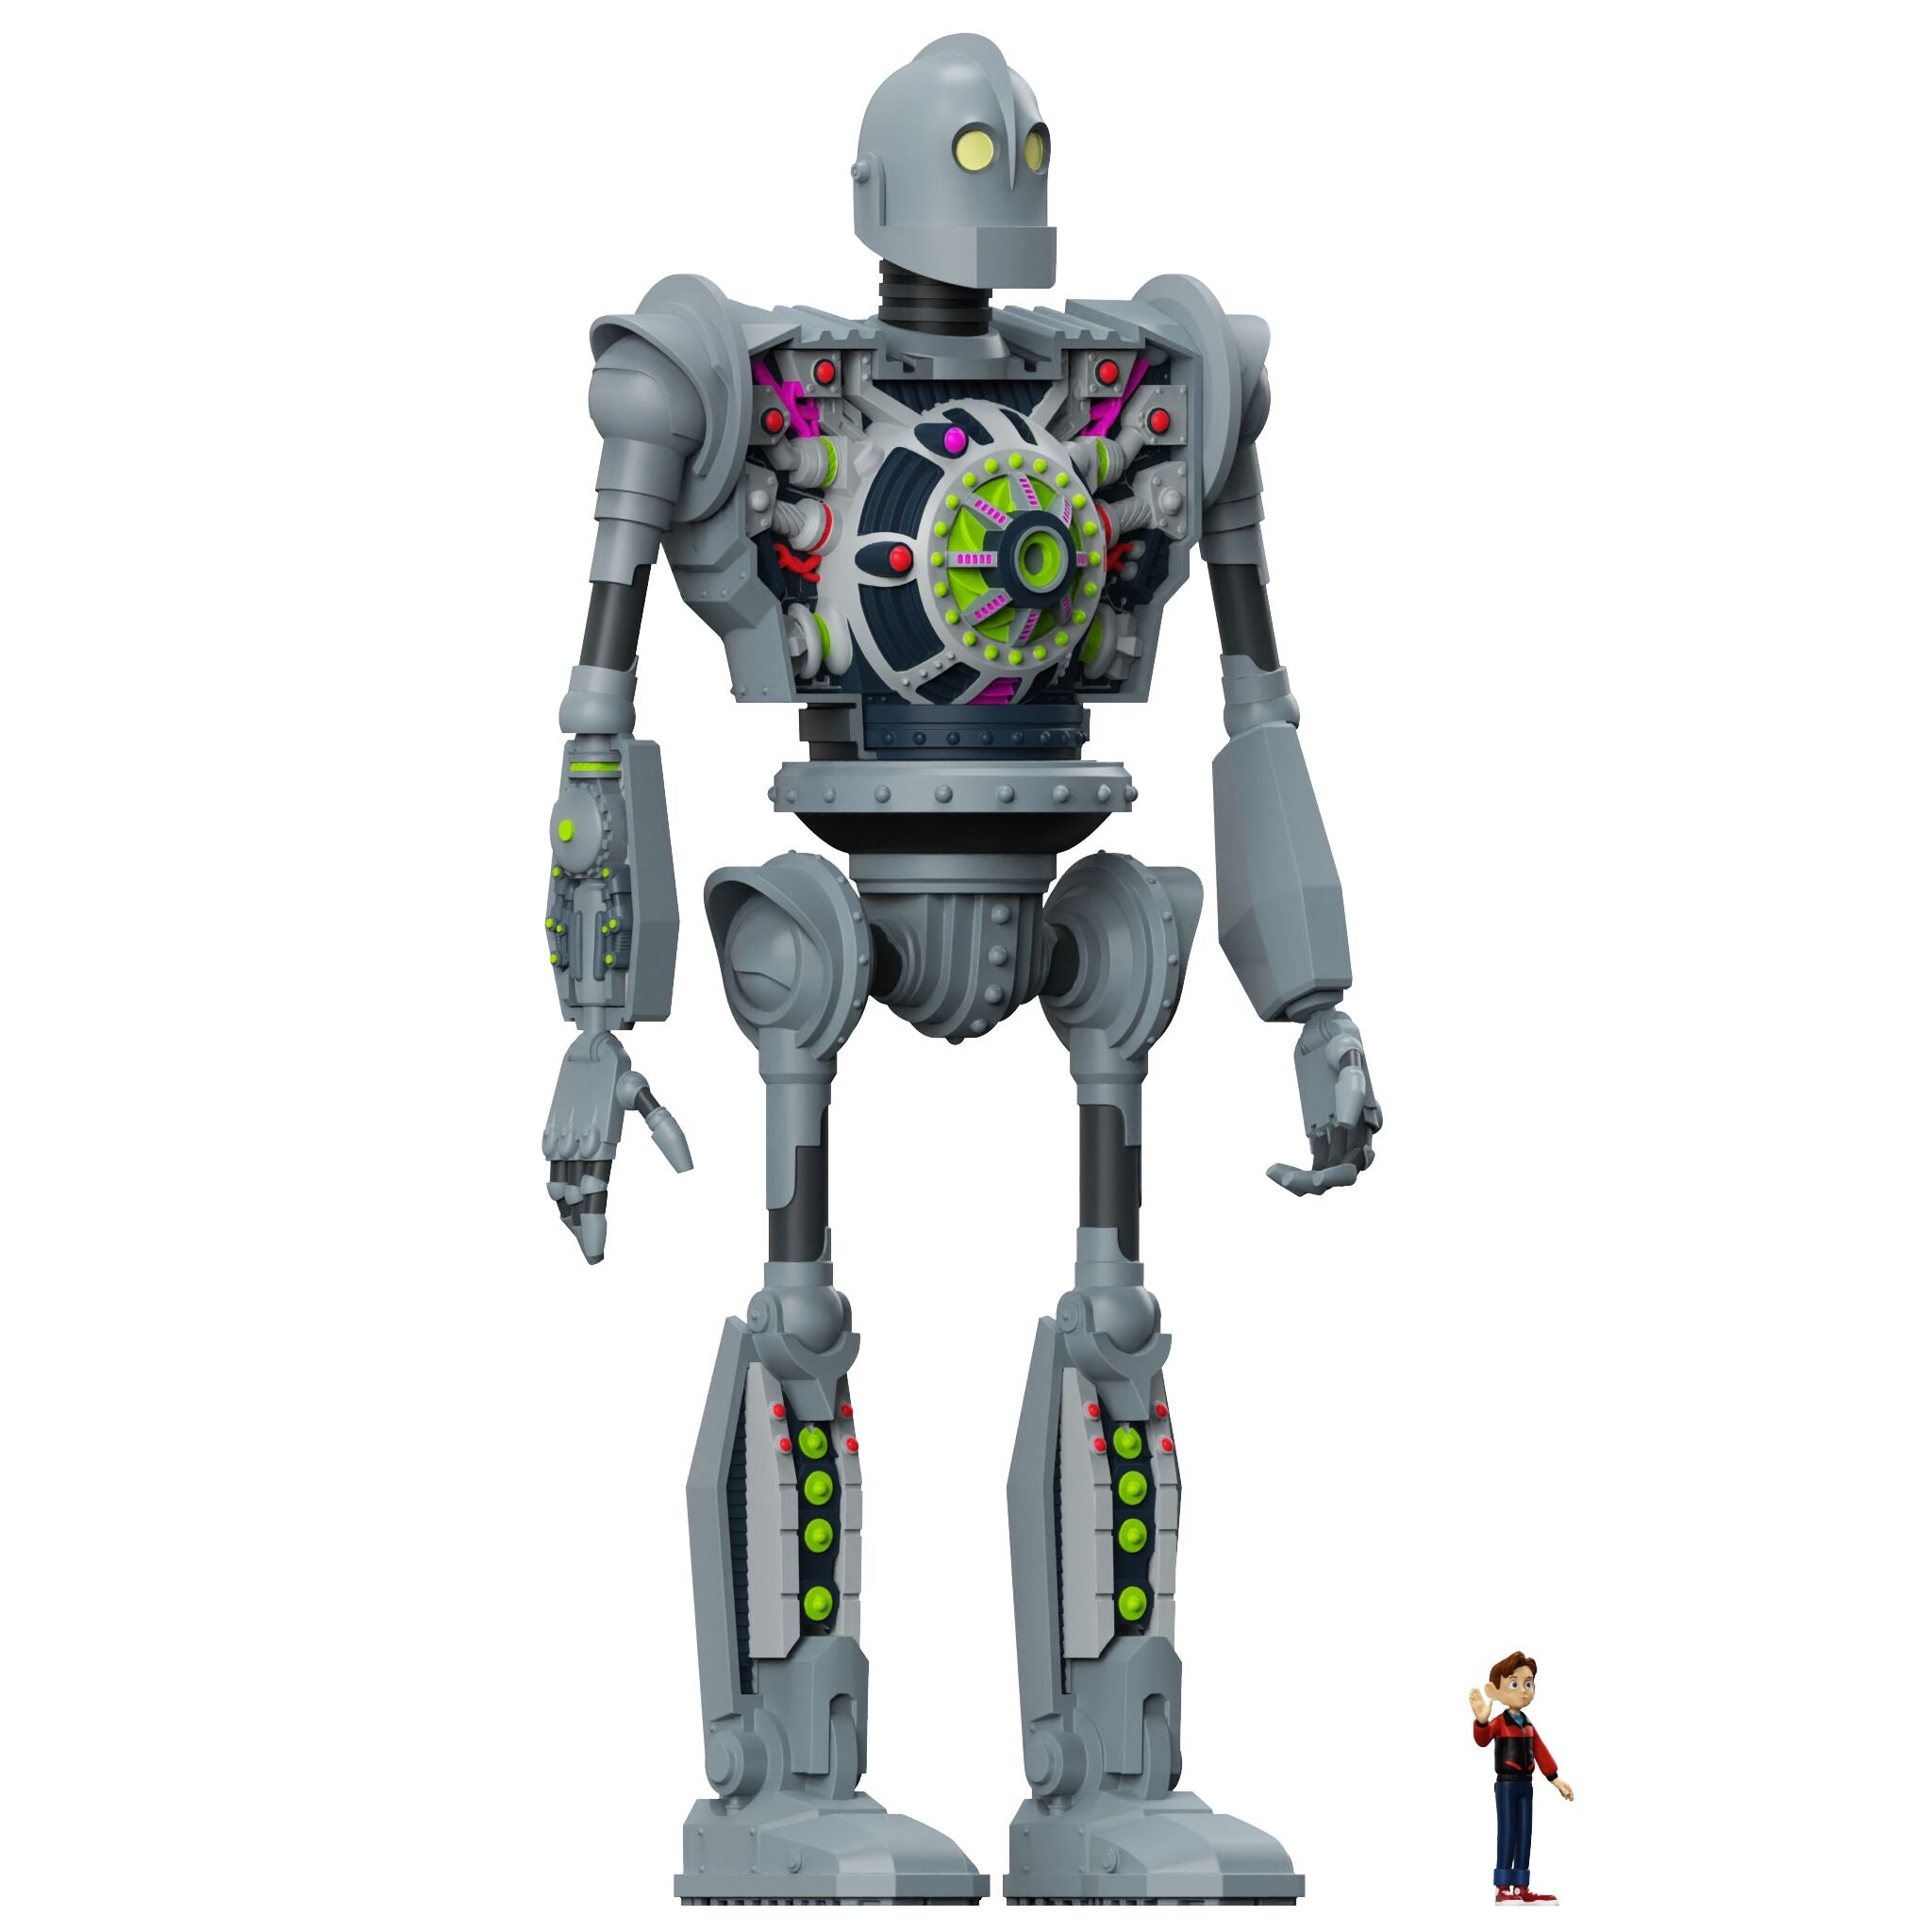 Iron Giant Super Cyborg - Iron Giant (Full Color)